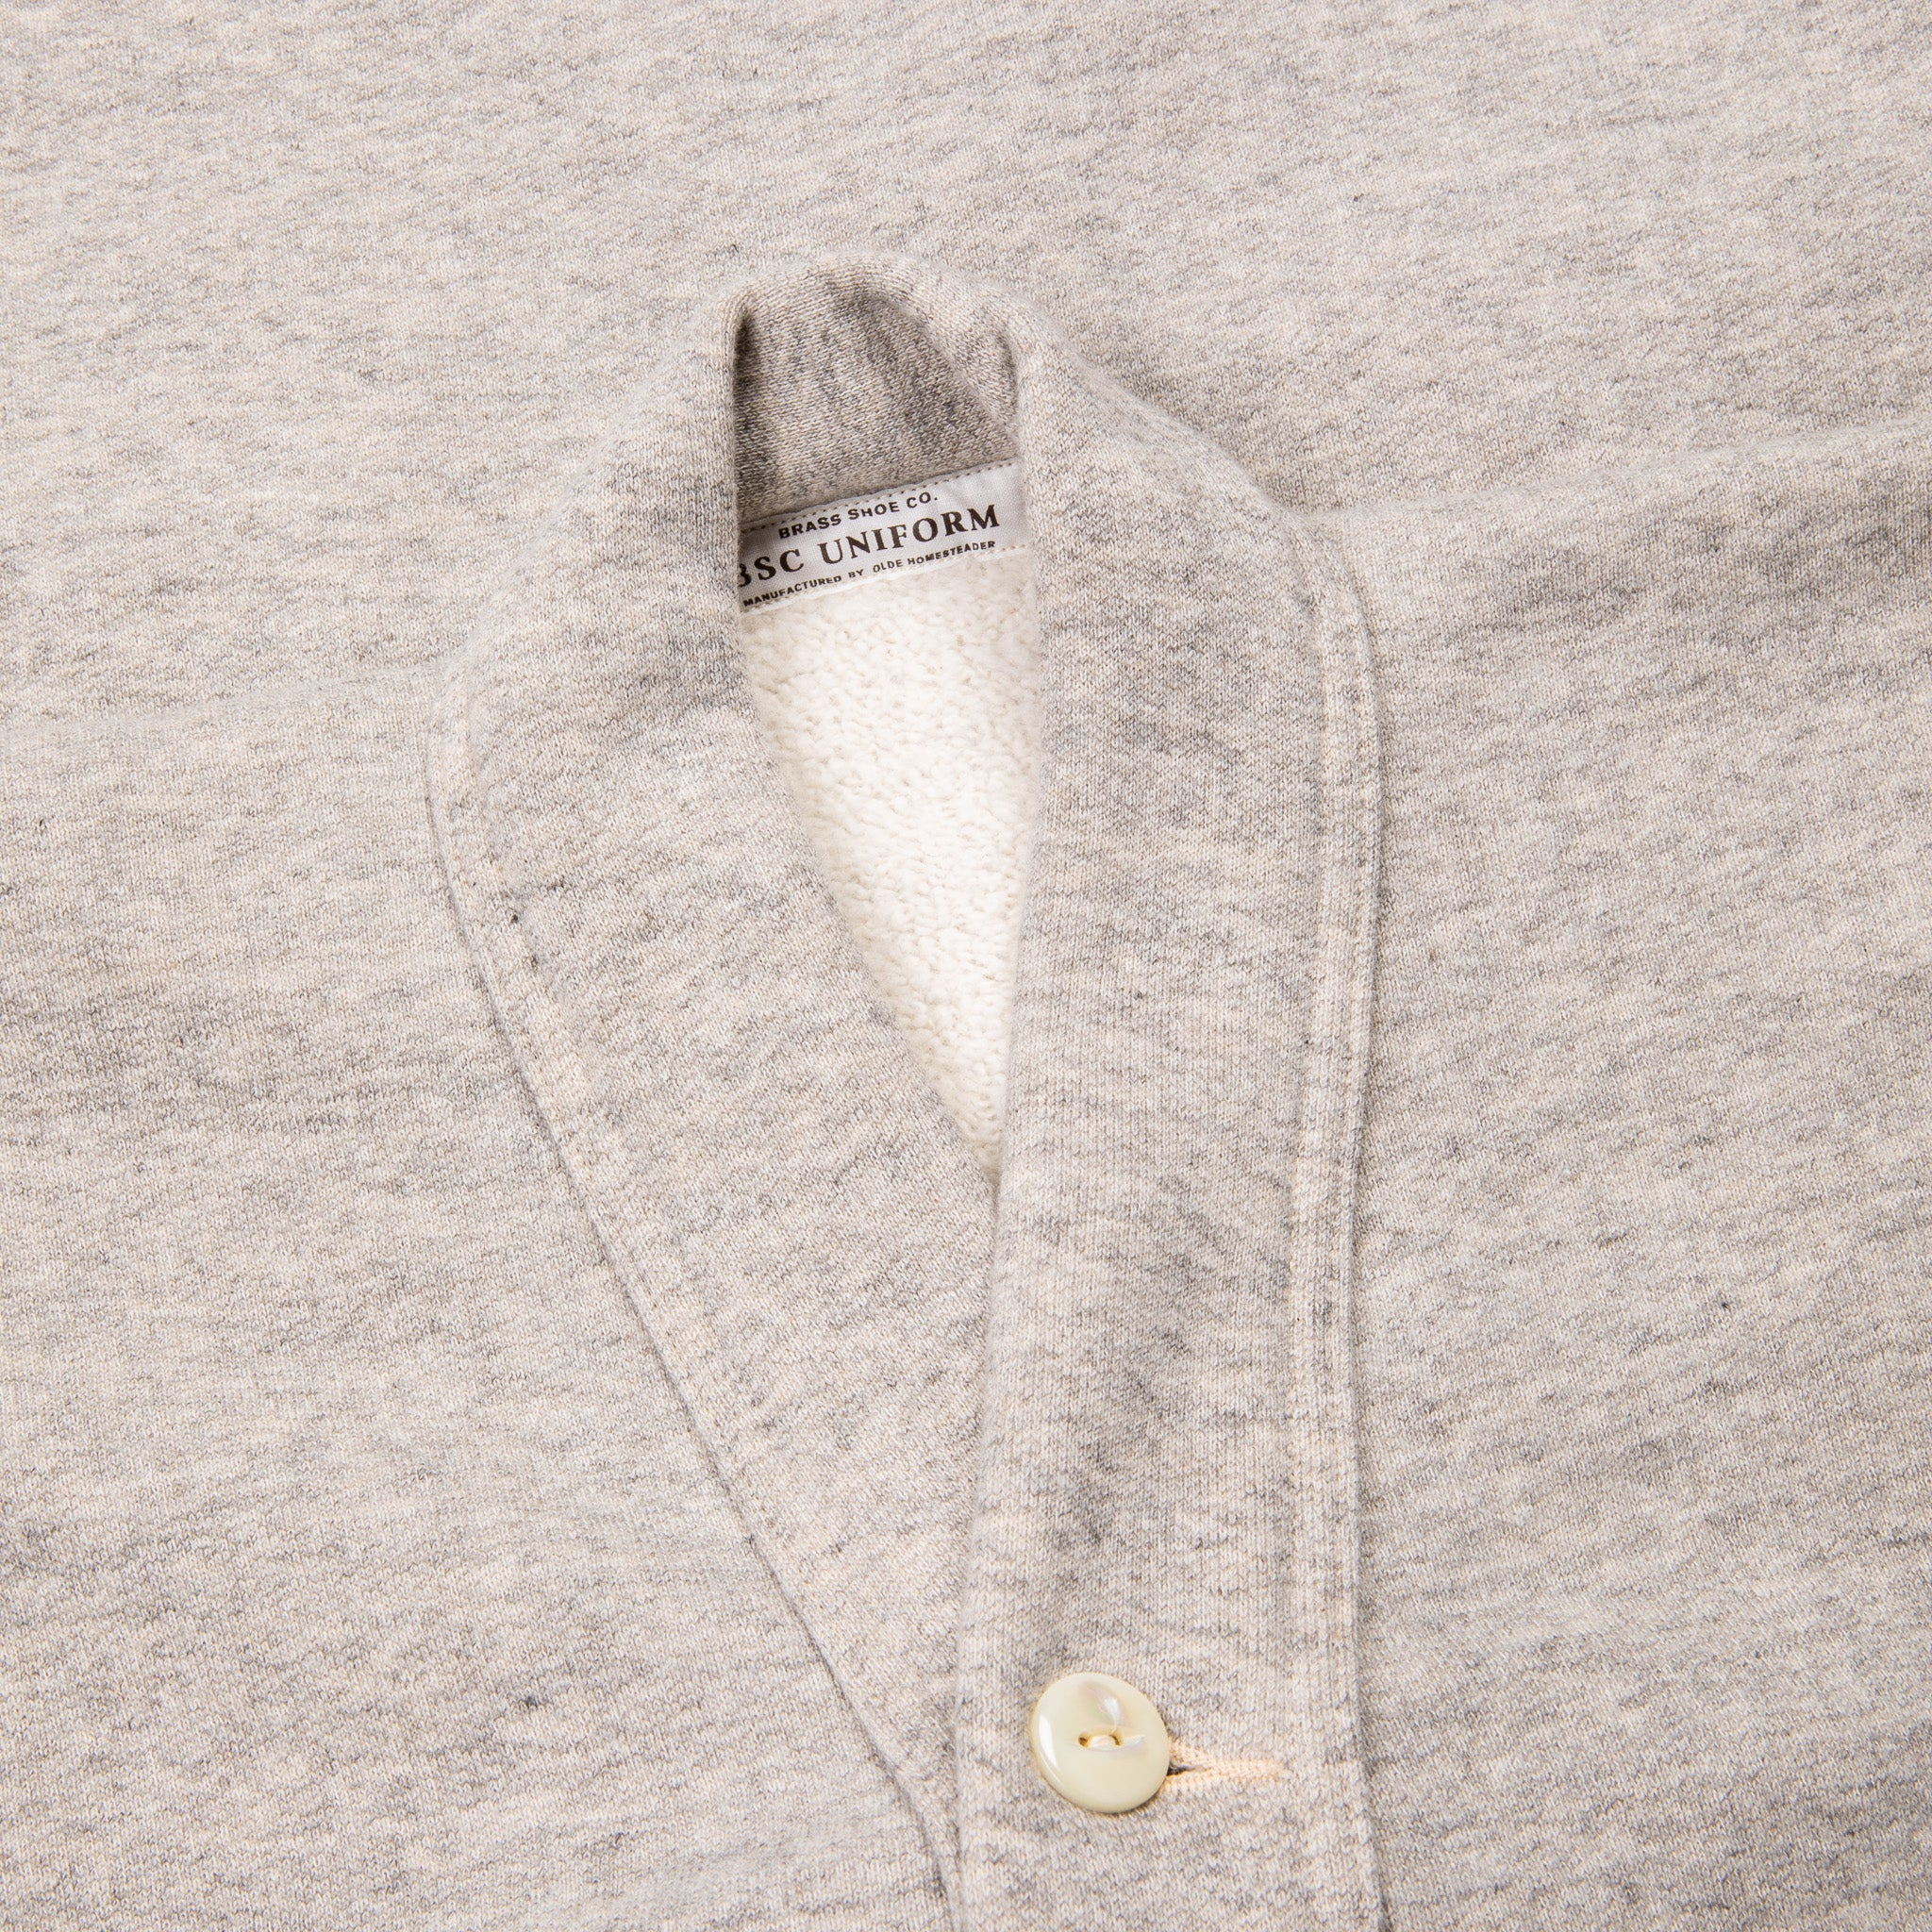 Olde Homesteader Extra Cotton Fleece Cardigan Top Grey – Frans